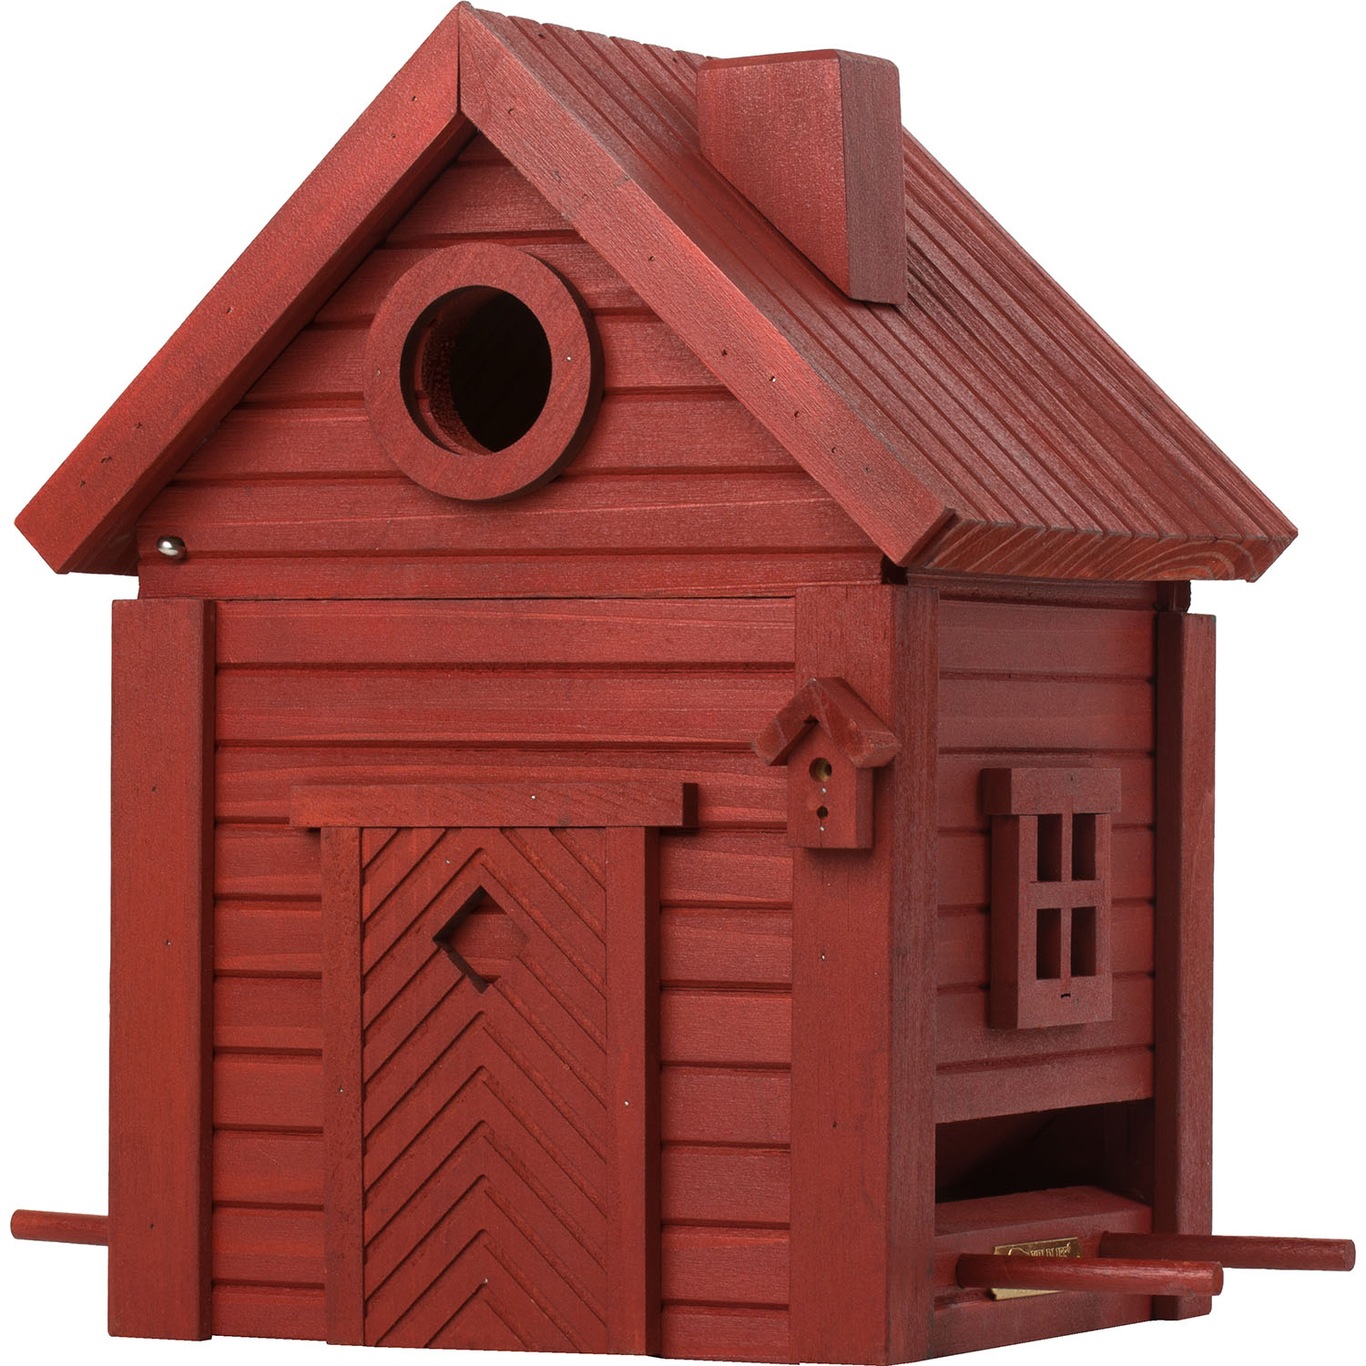 Multiholk Bird Feeder / Birdhouse, Oxide Red